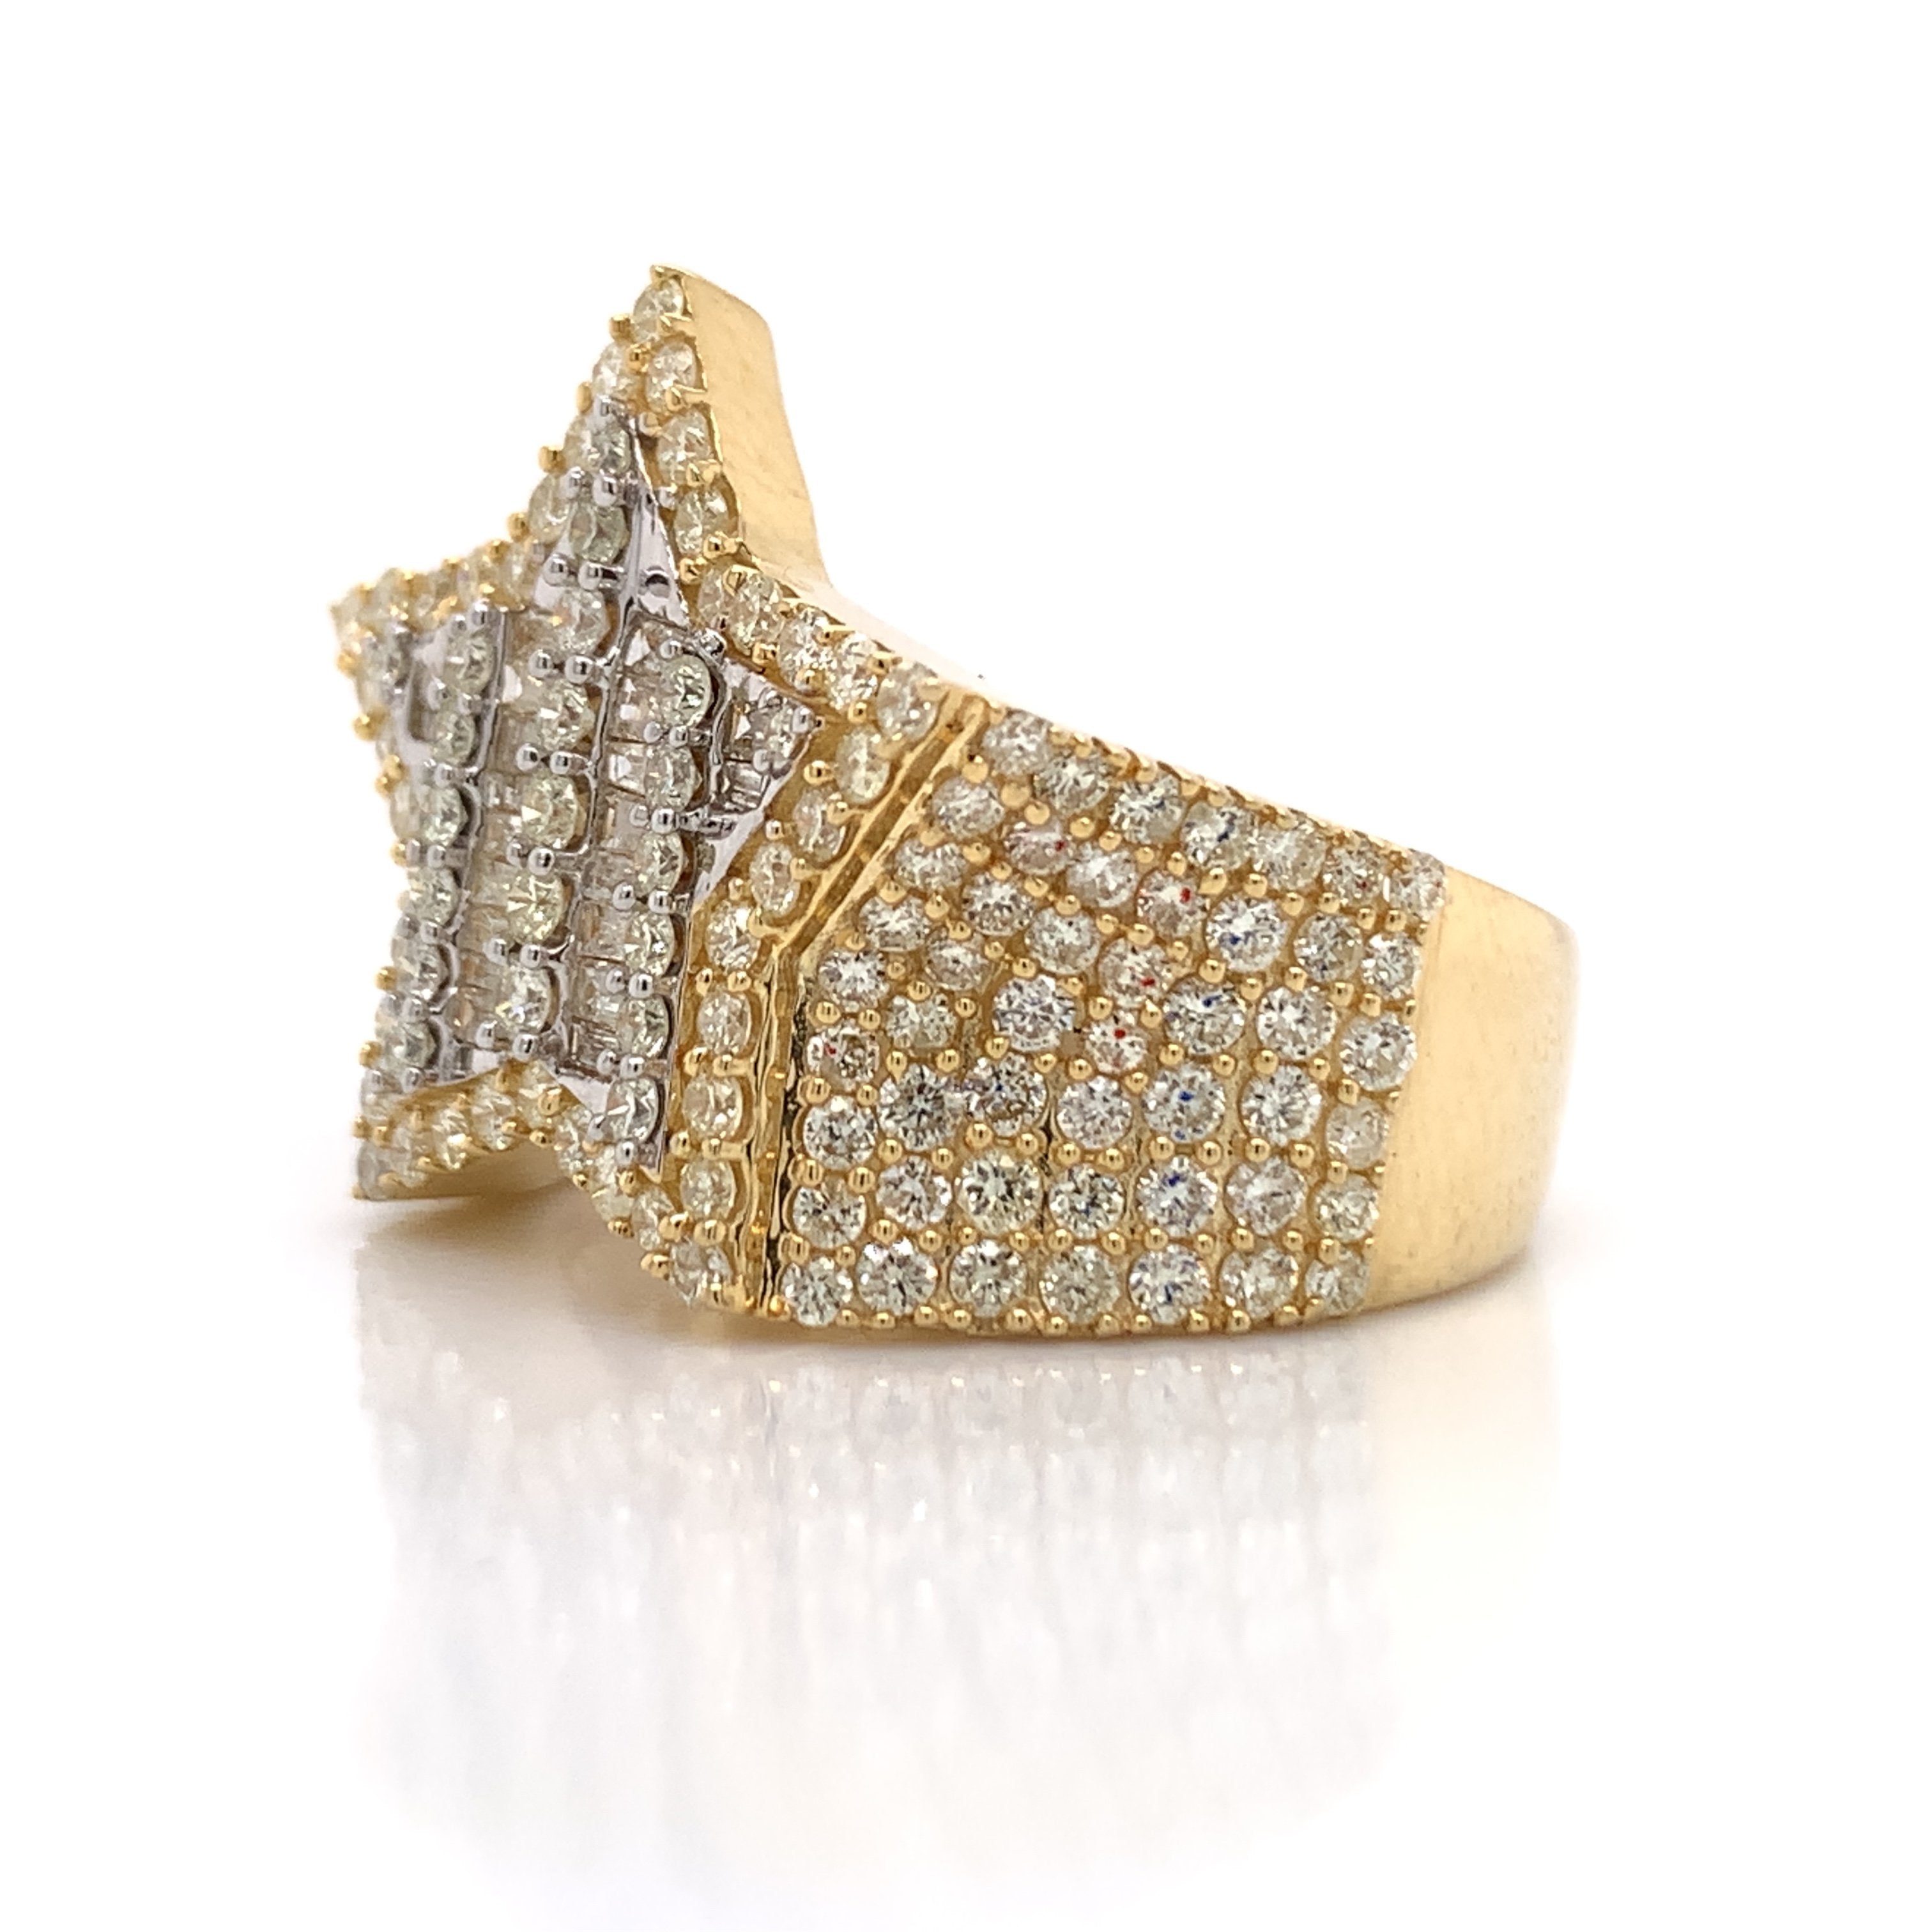 2.00 CT. Diamond Ring 10KT Gold - White Carat Diamonds 